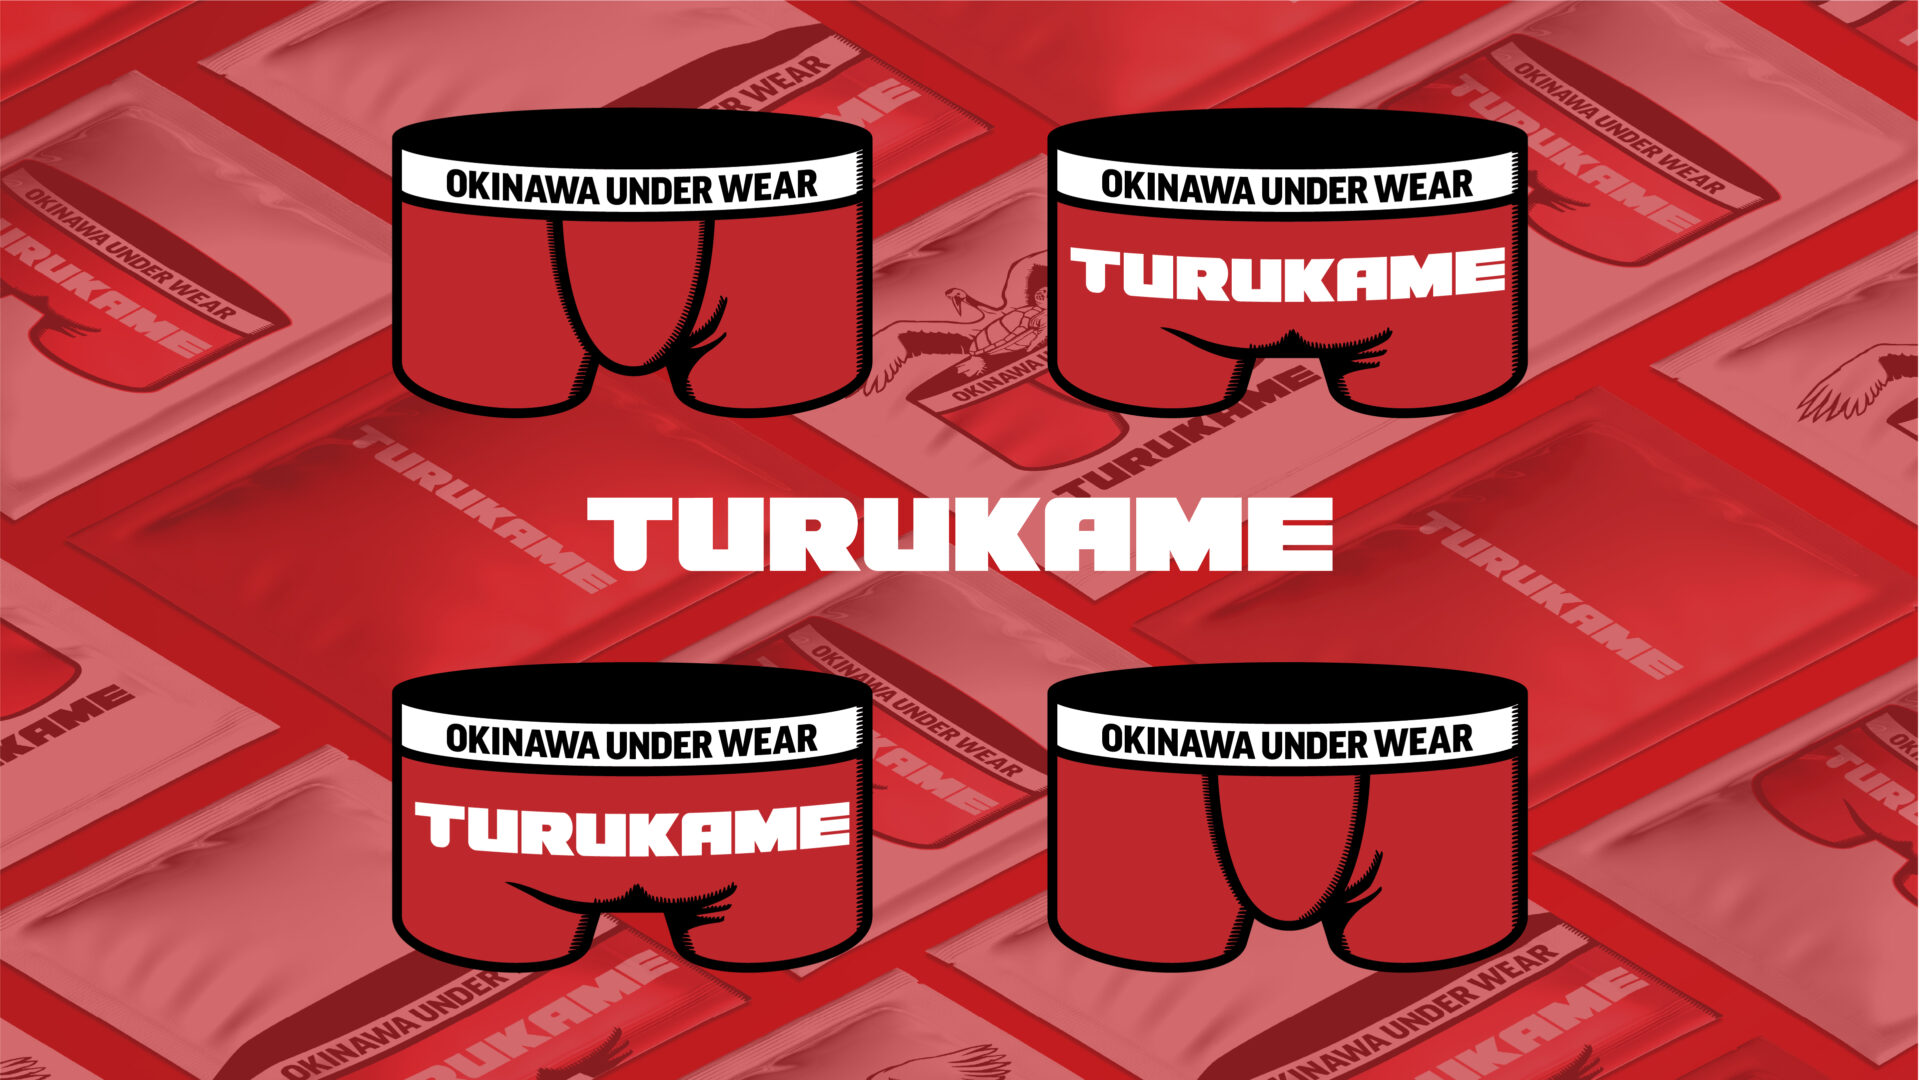 「TURUKAME」のサムネイル画像